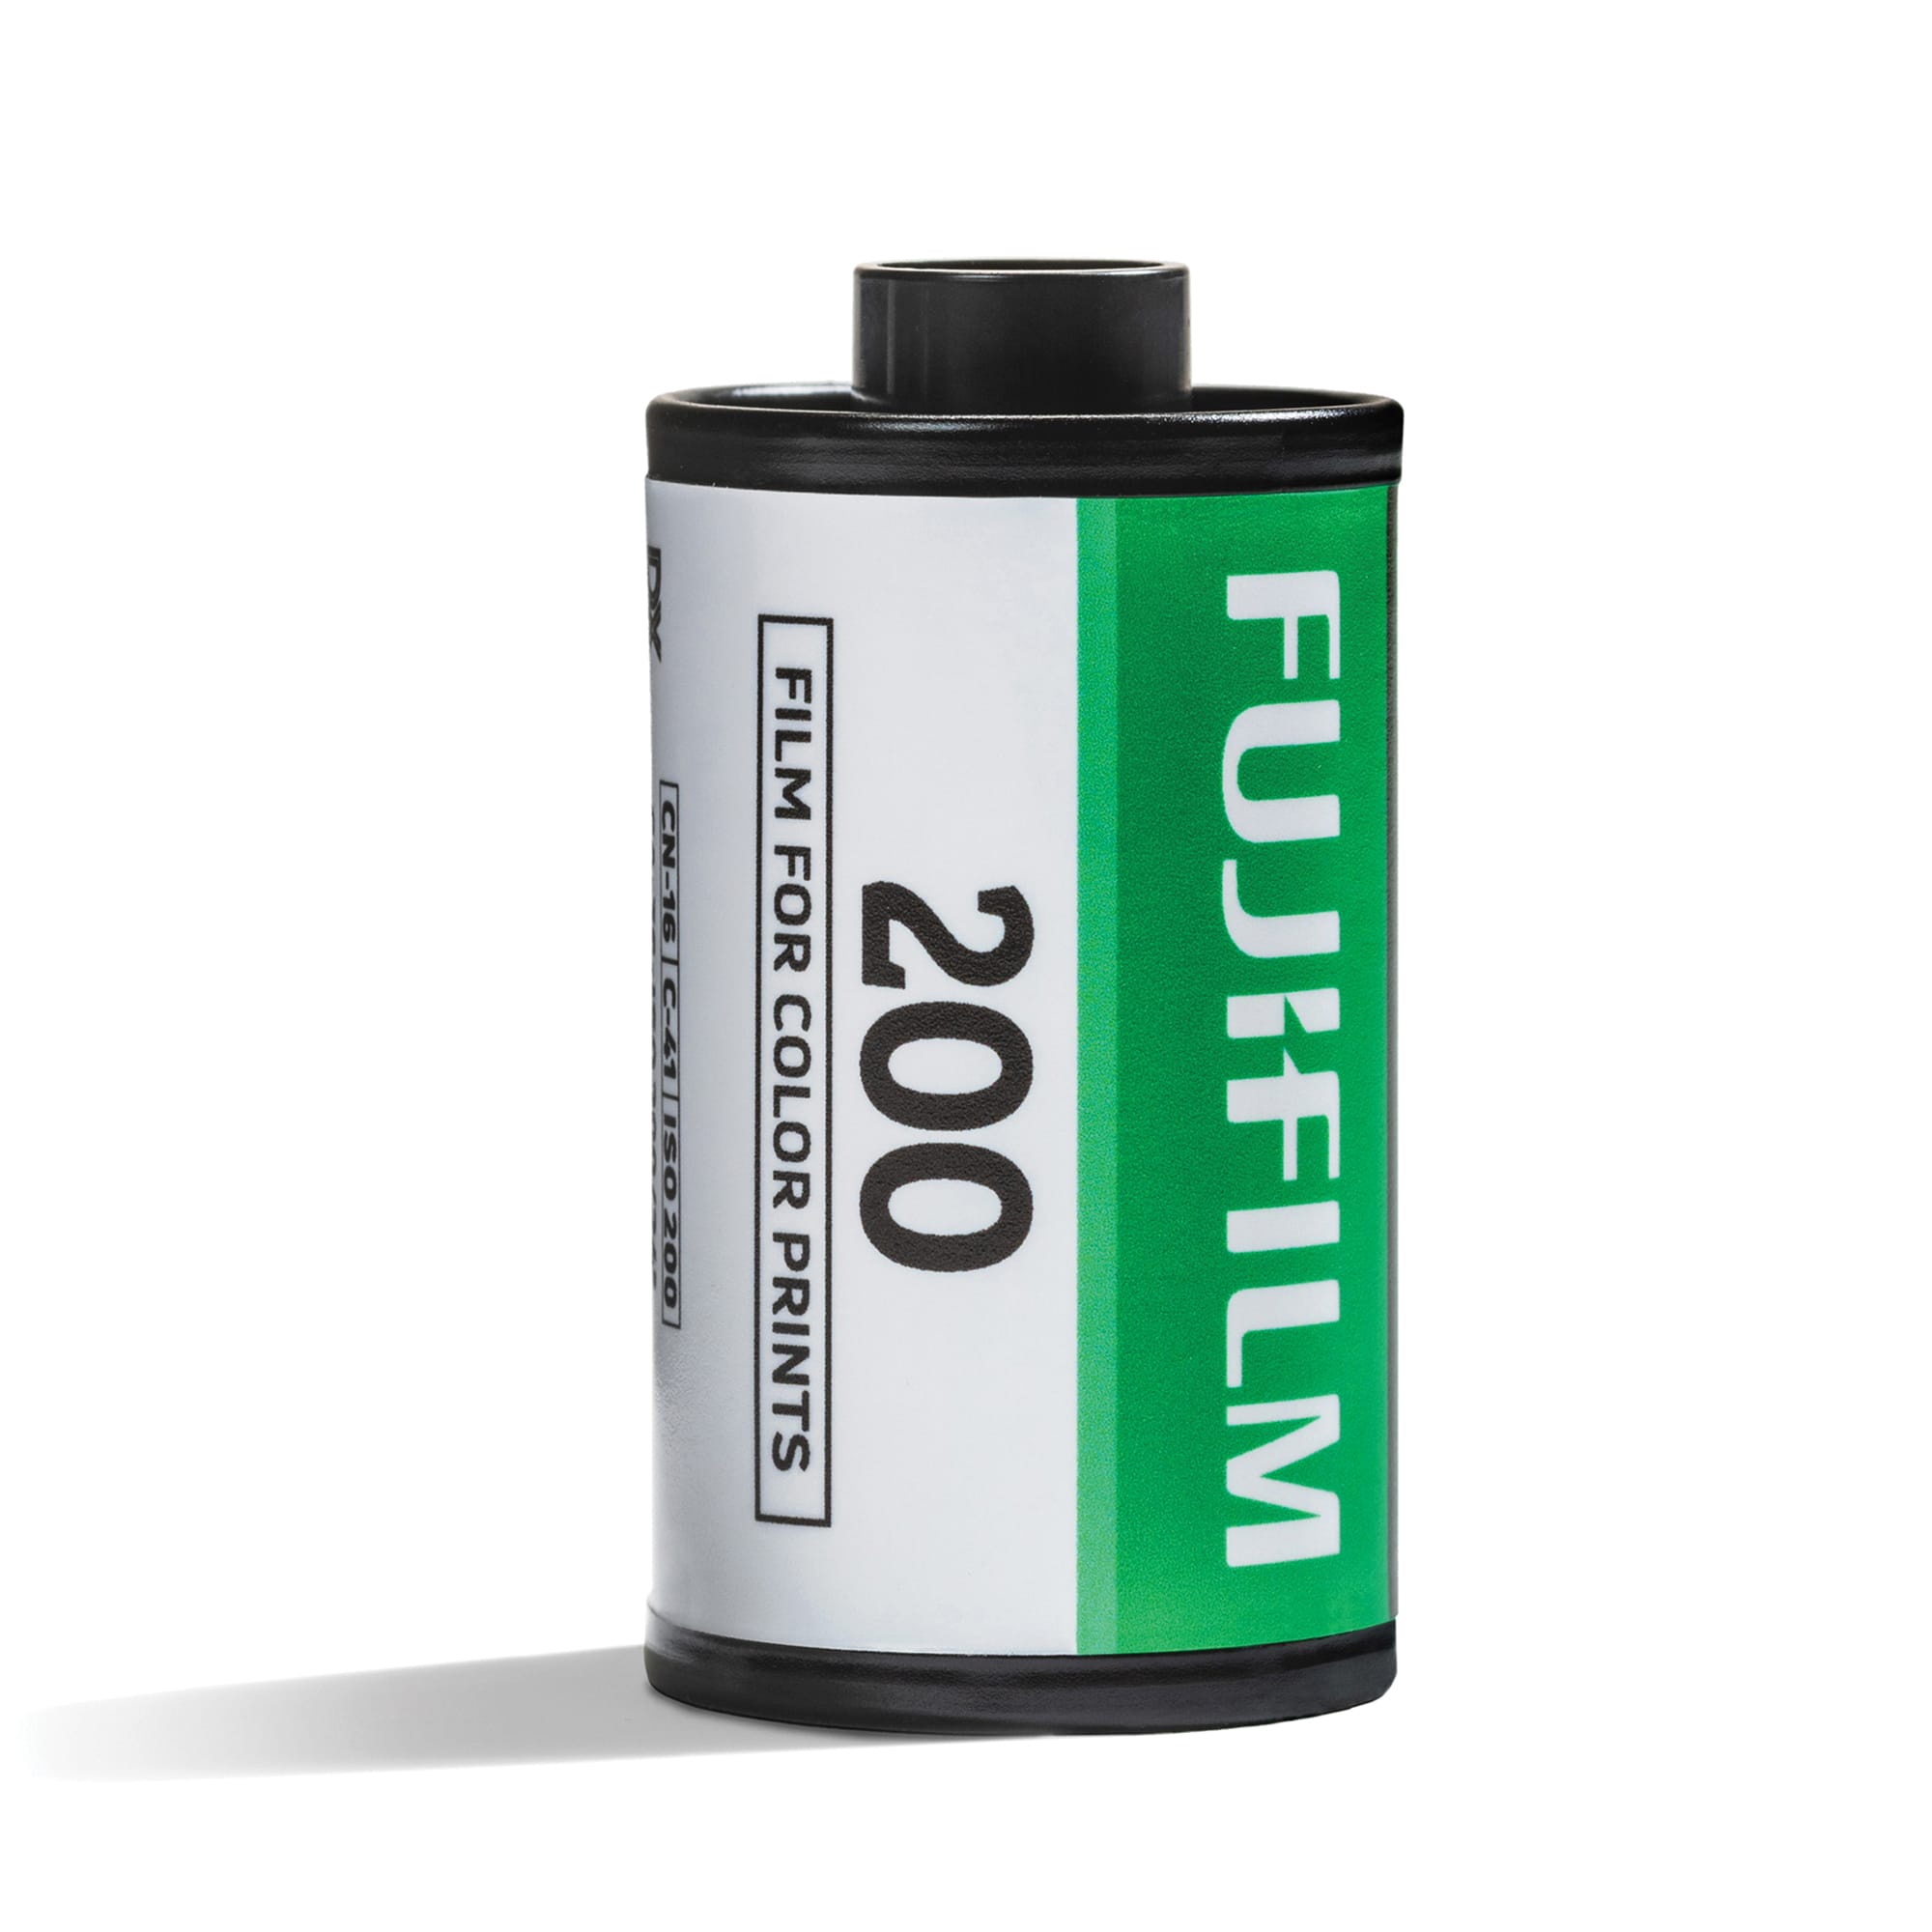 Fujifilm ISO 200 Color Negative Film